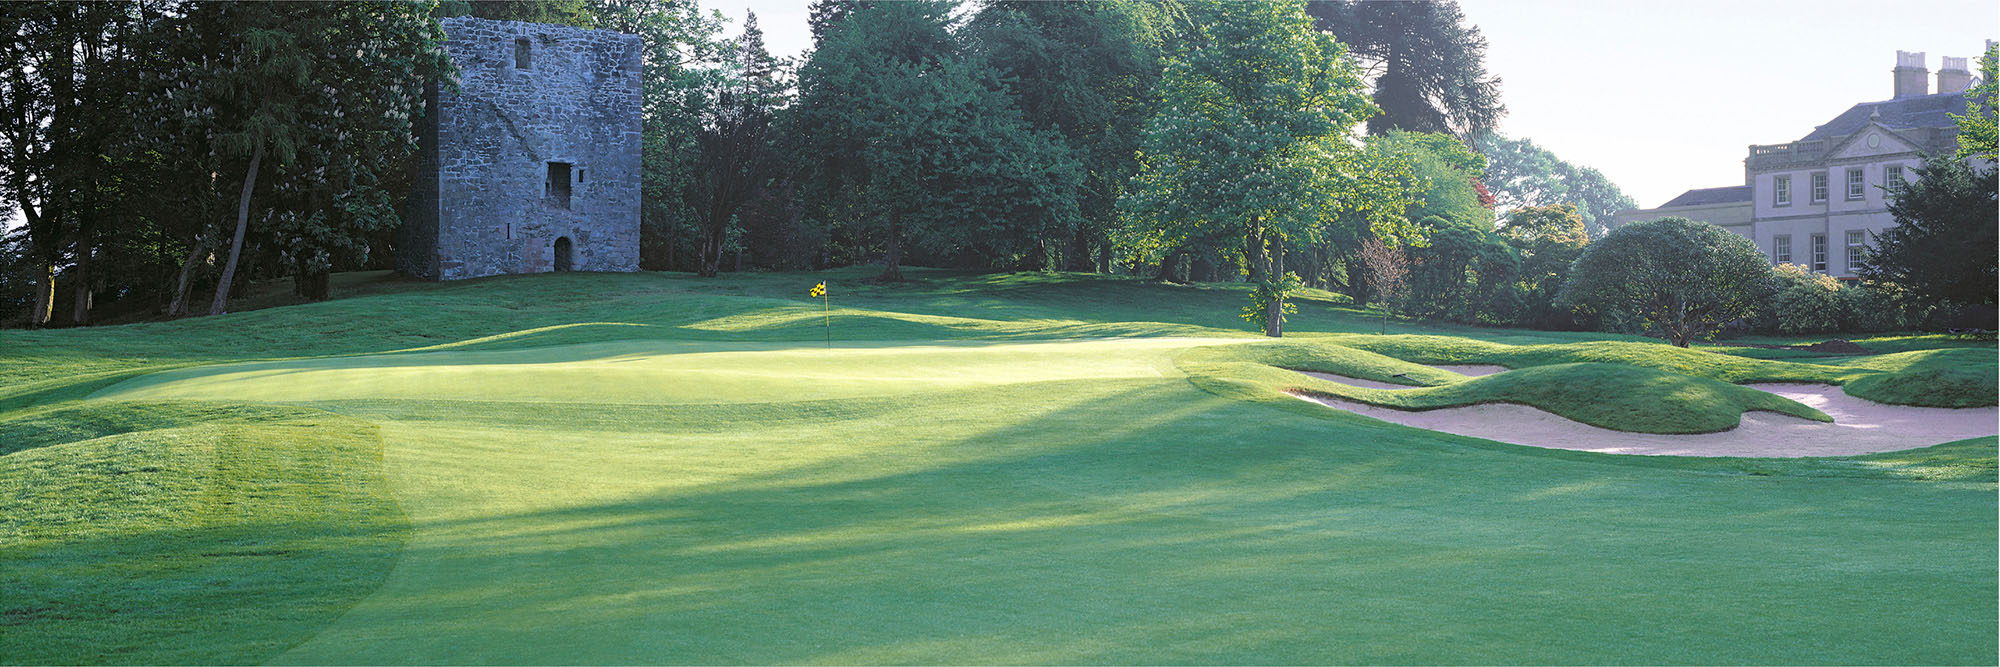 Golf Course Image - Loch Lomond No. 18